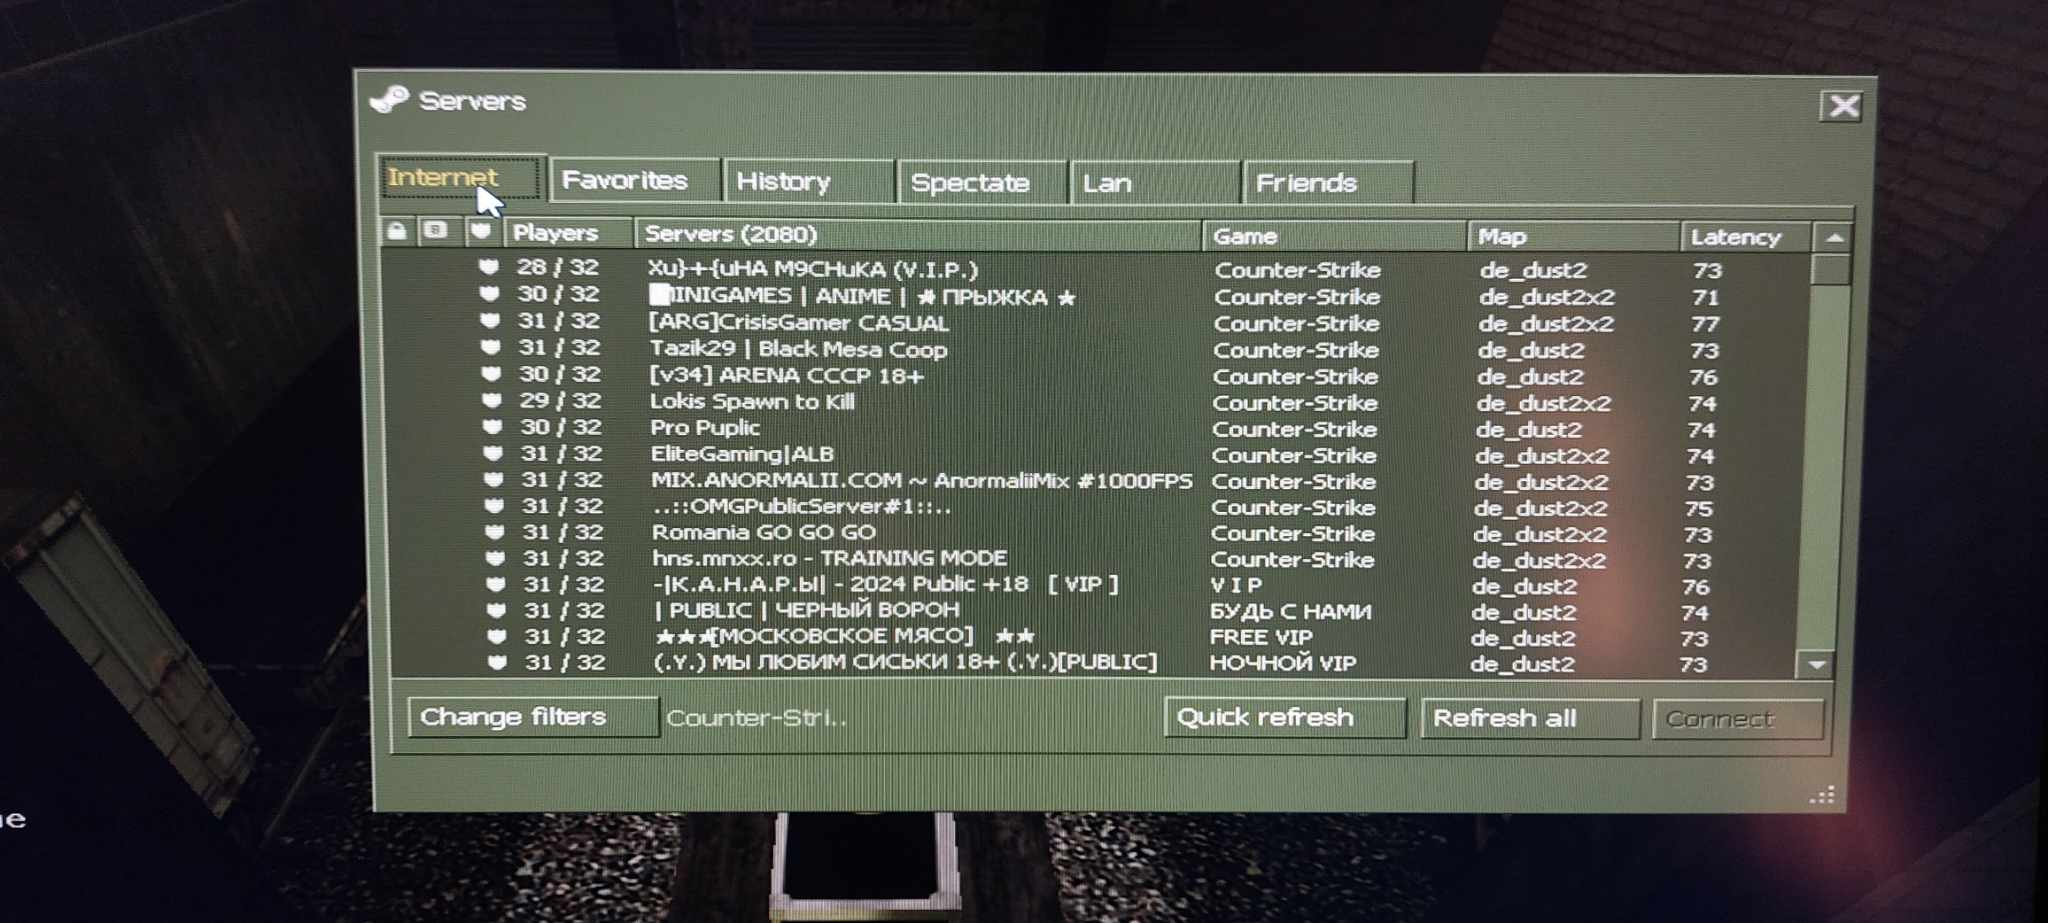 CS 1.6 Servers List Not Showing? - CS 1.6 servers